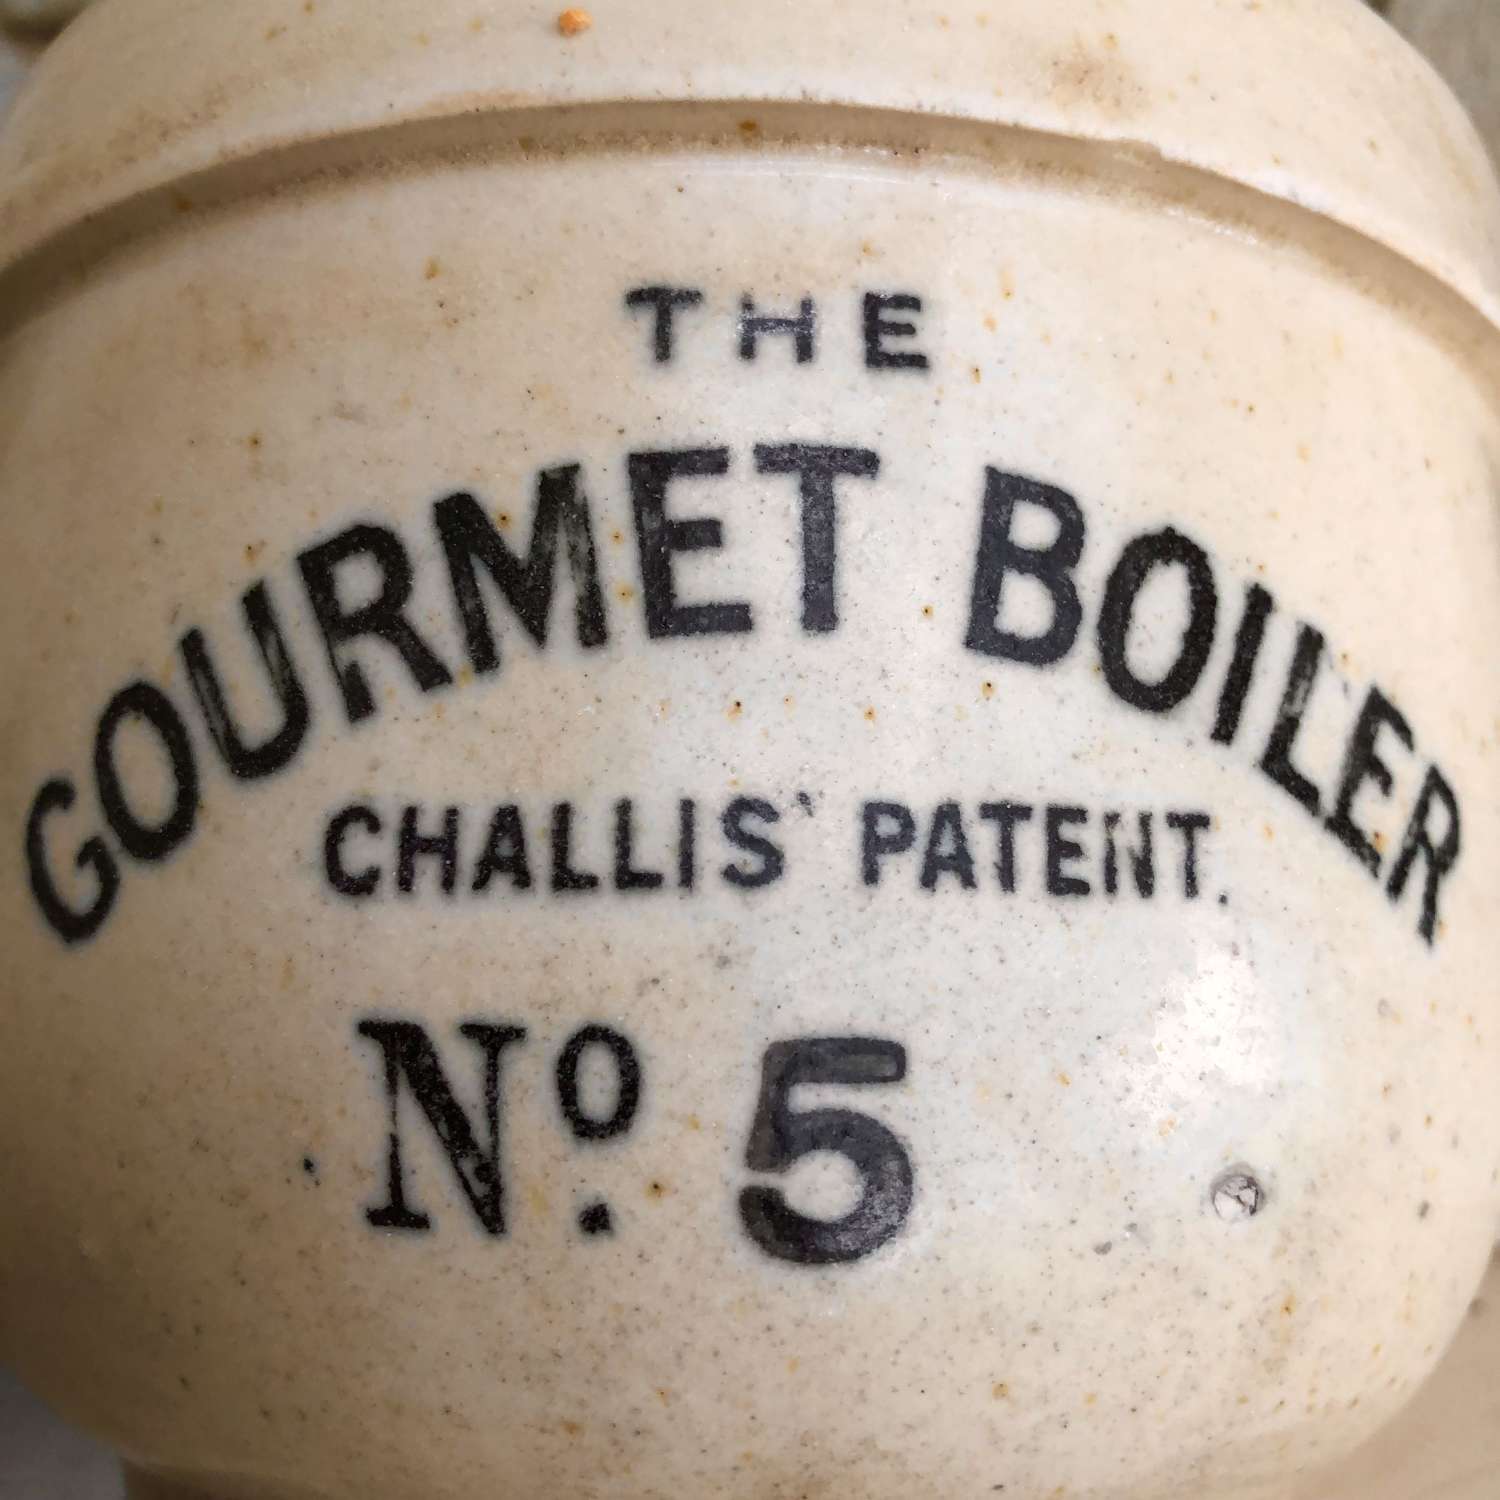 Gourmet Boiler No 5